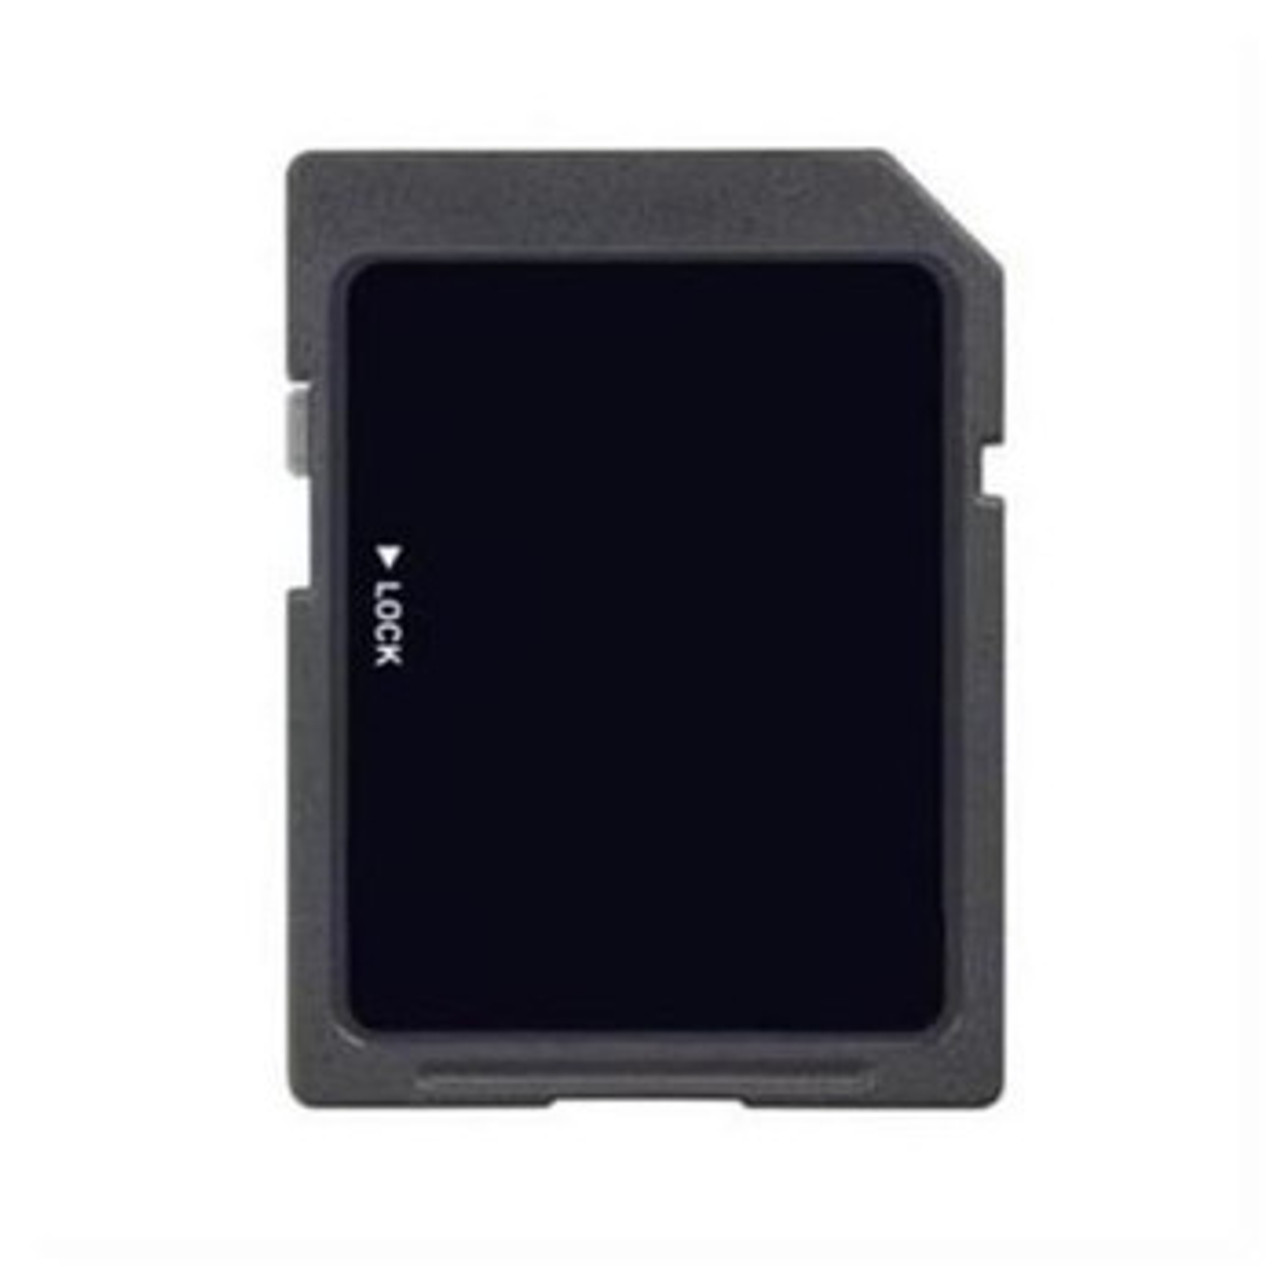 SDSDXNE-032G-GNCIN | Sandisk | Extreme 32Gb Class 10 Sdhc Uhs-I U3 Flash Memory Card